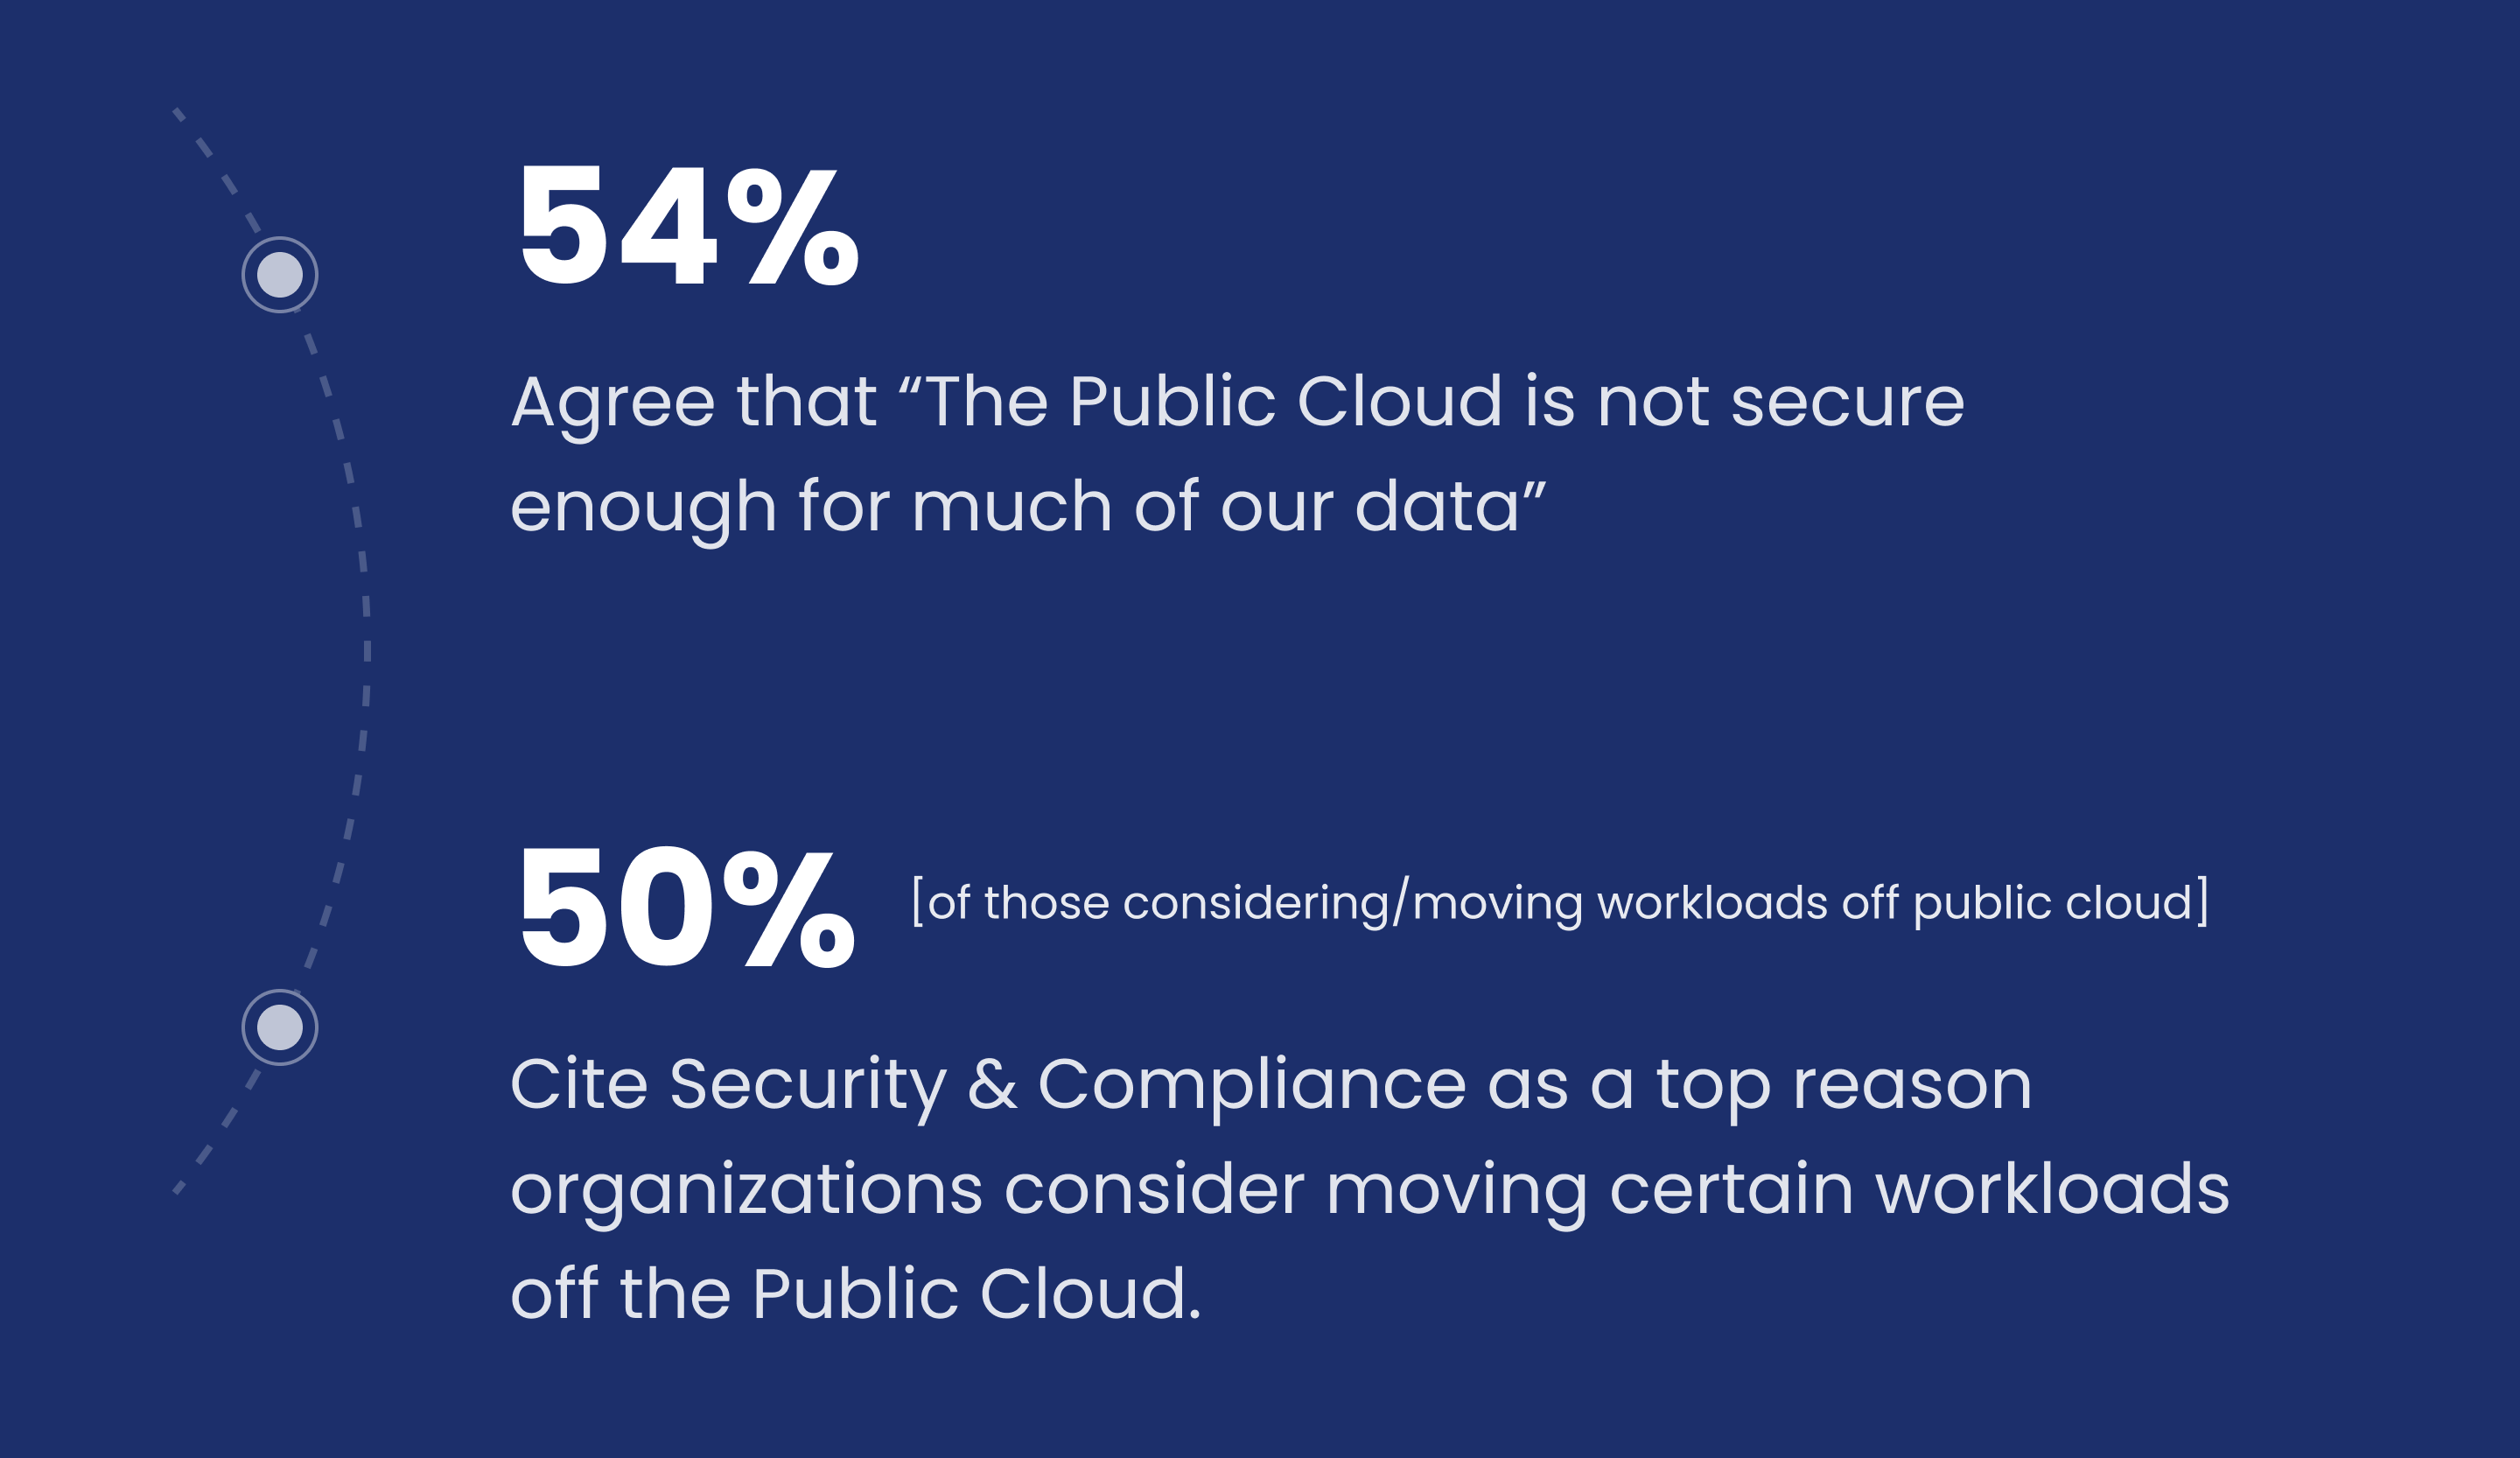 Cloud security concerns